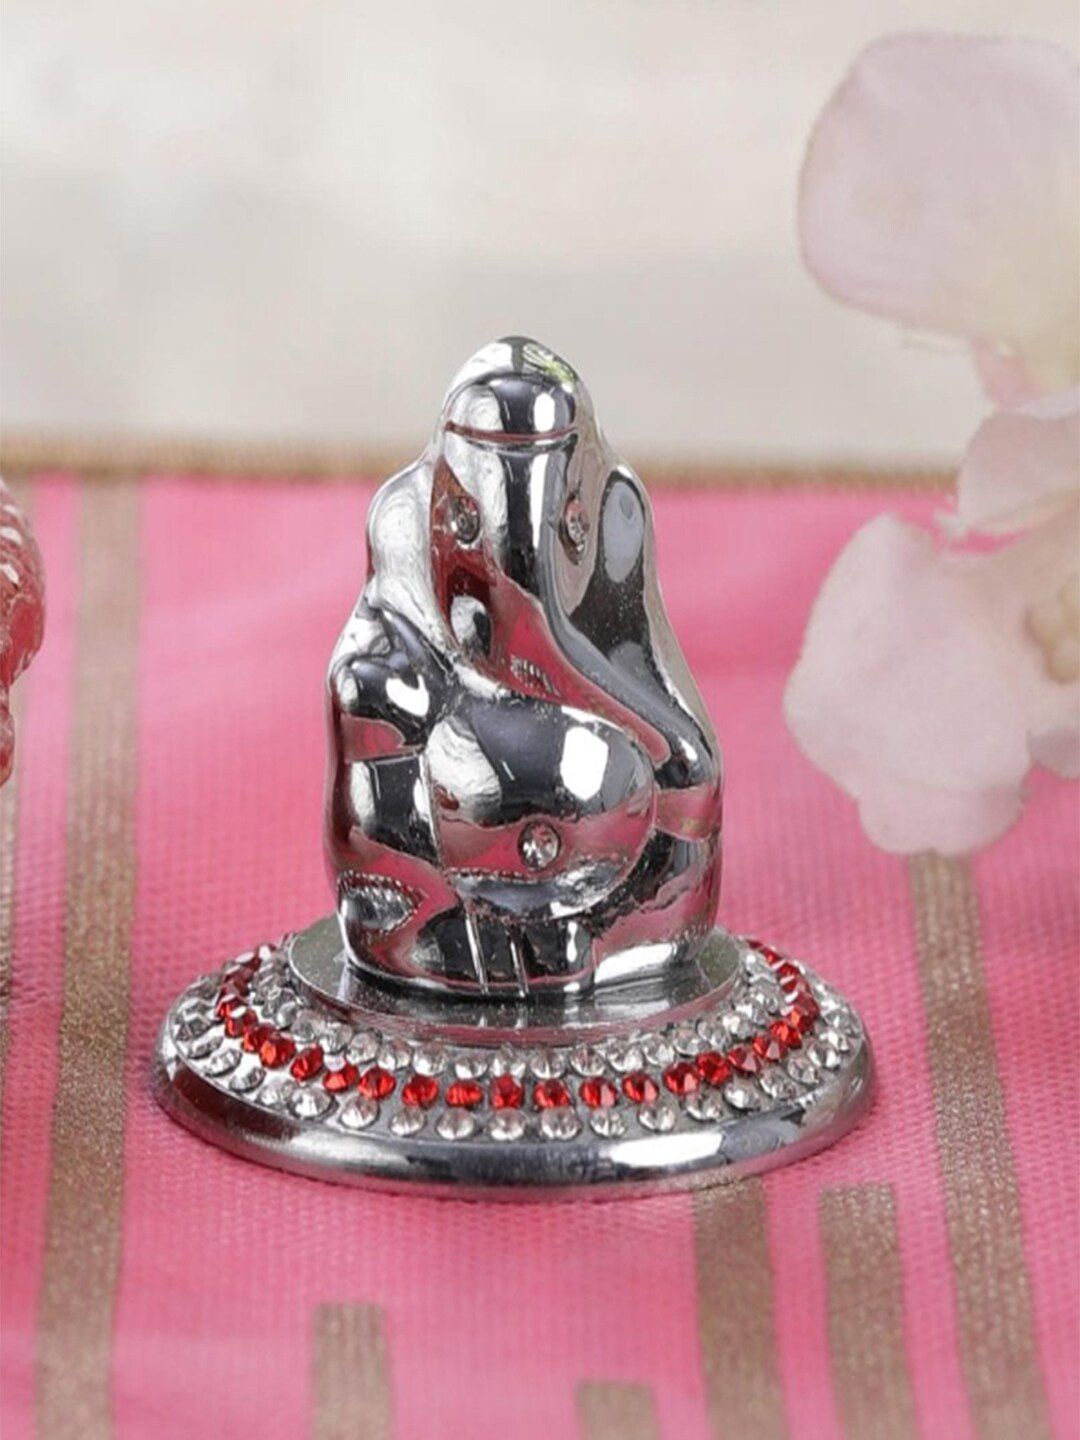 Gallery99 Silver-Toned Lord Ganpati Idol Showpiece Price in India